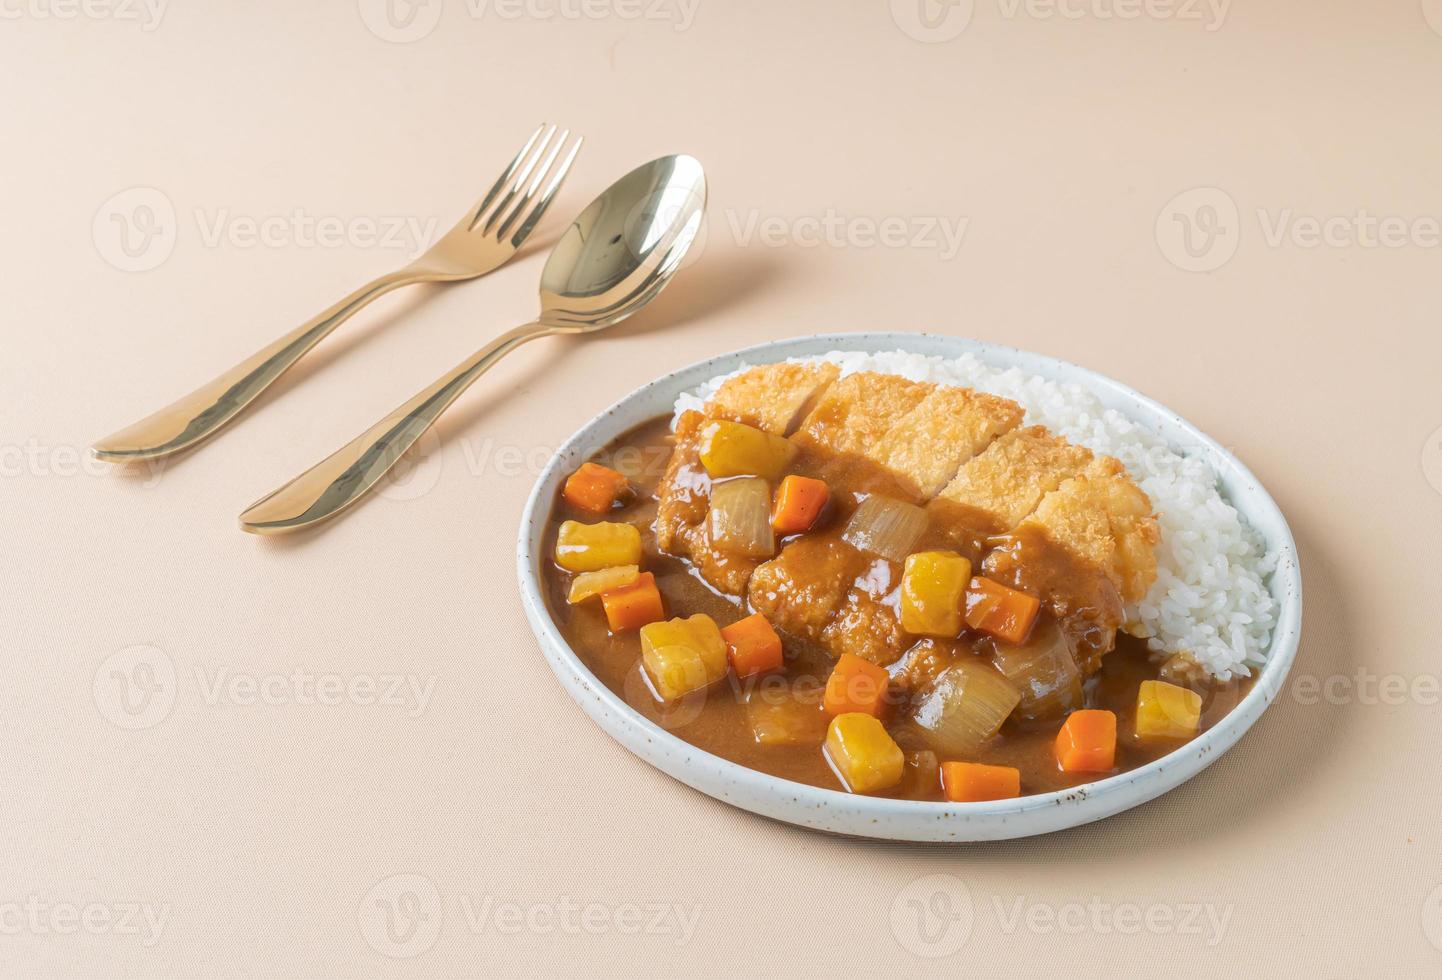 Chuleta de cerdo frita al curry con arroz - estilo de comida japonesa foto